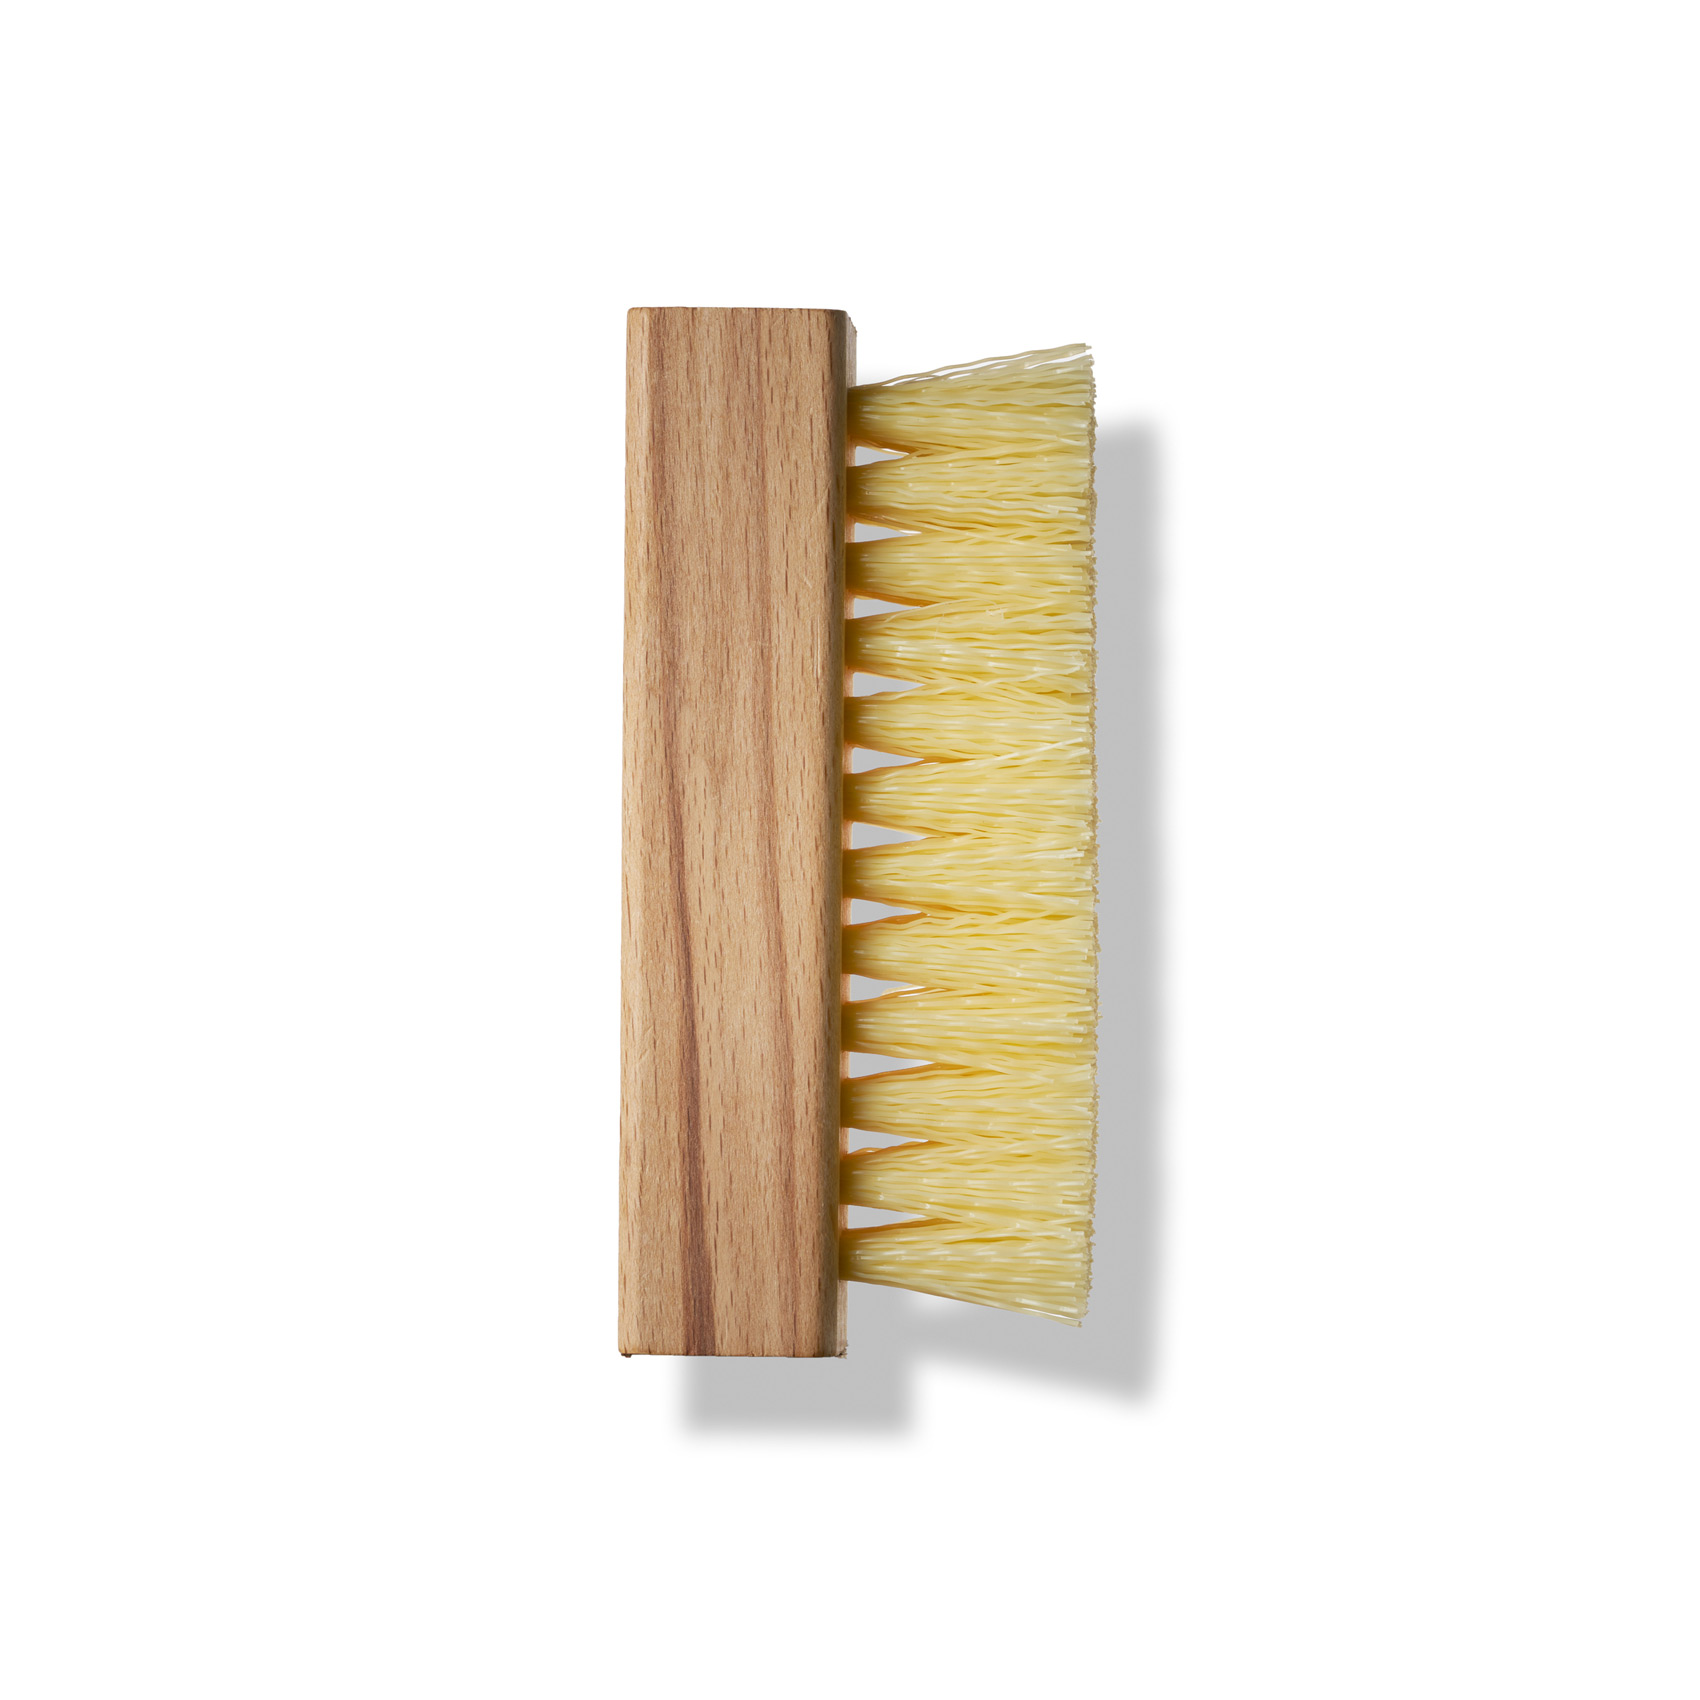 Jason Markk Reinigungsbürste Standard Cleaning Brush